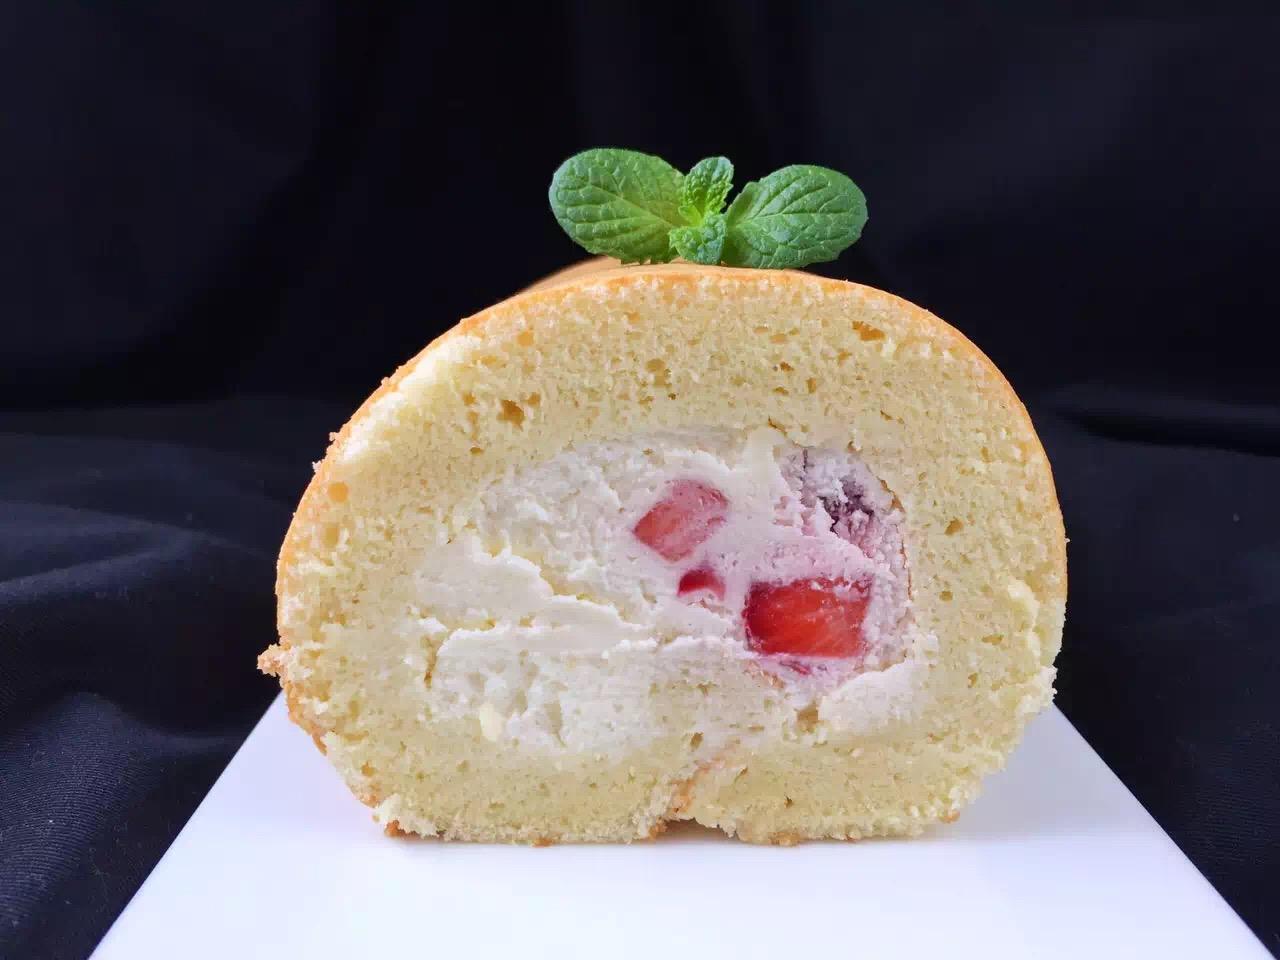 如何制作不开裂的瑞士卷蛋糕基本卷蛋糕食谱简易卷蛋糕_哔哩哔哩 (゜-゜)つロ 干杯~-bilibili